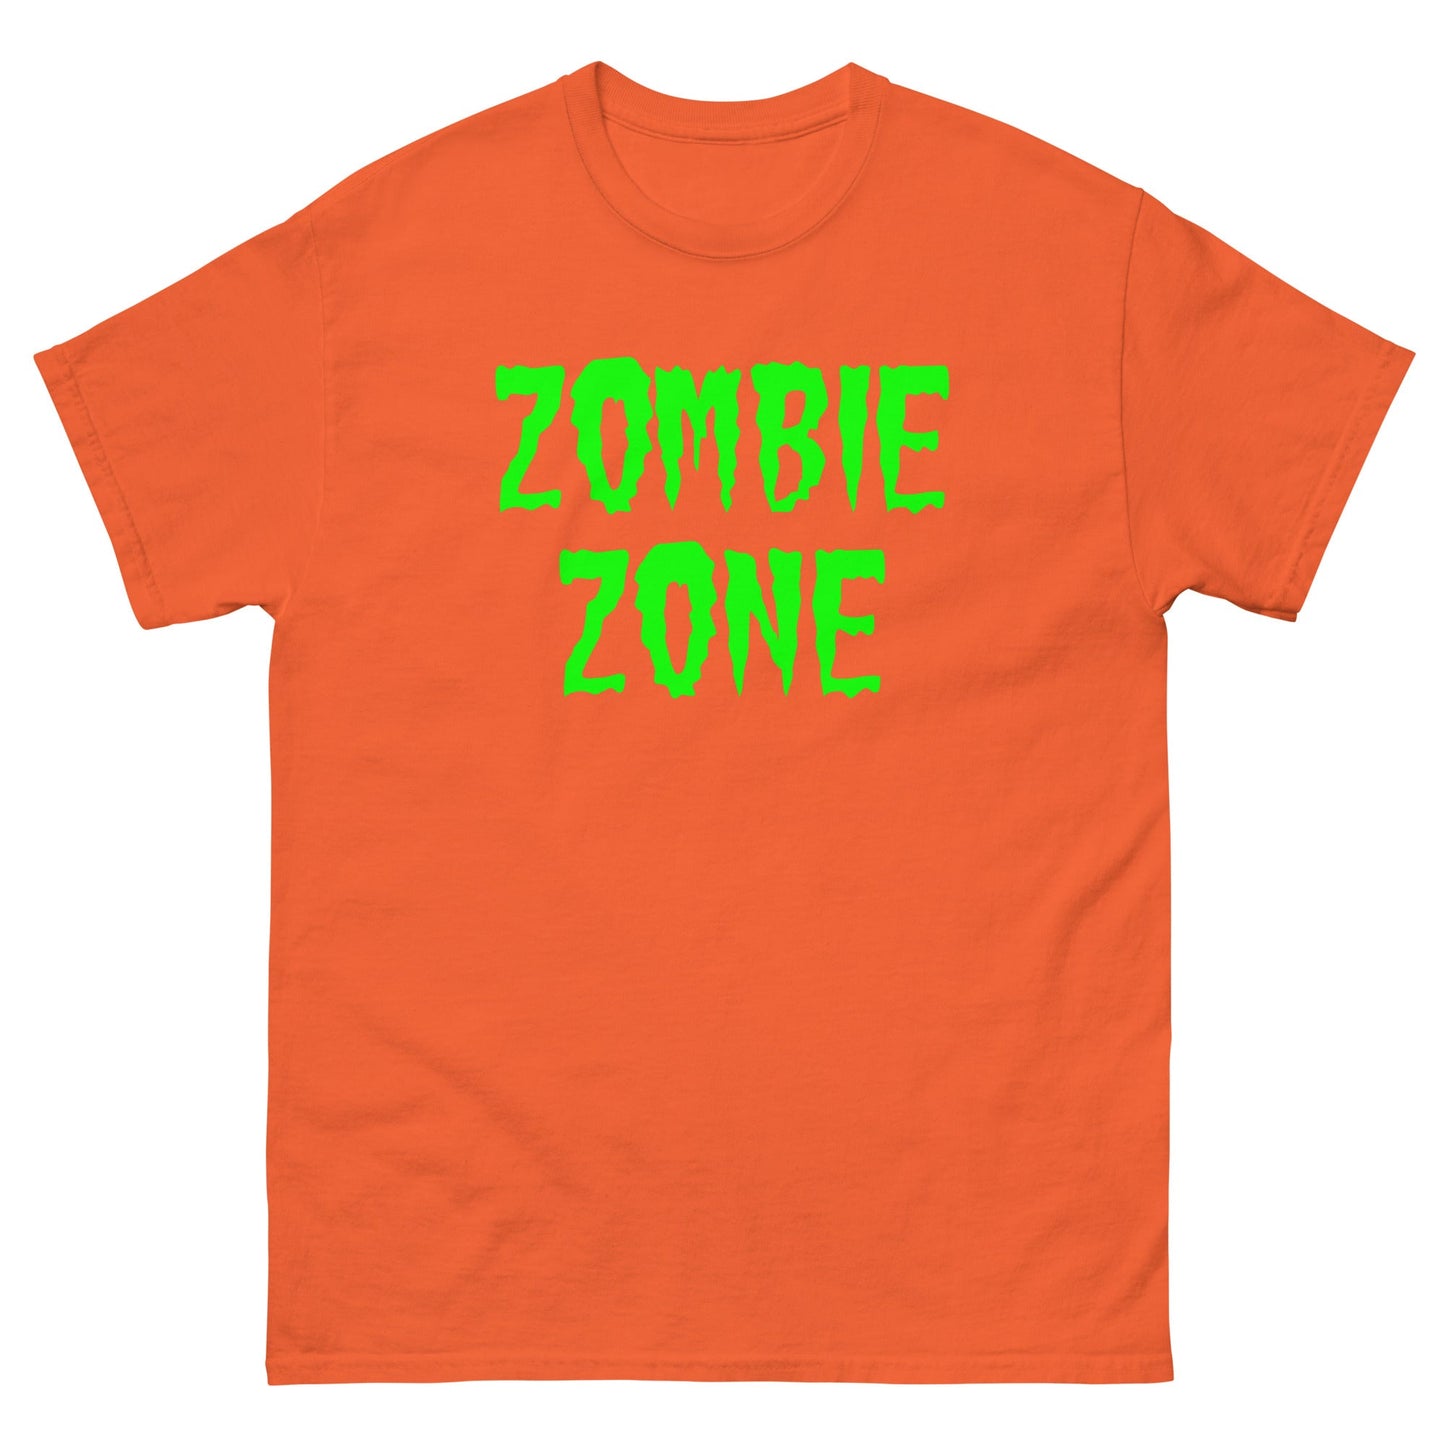 Zombie zone T-shirt Orange / S